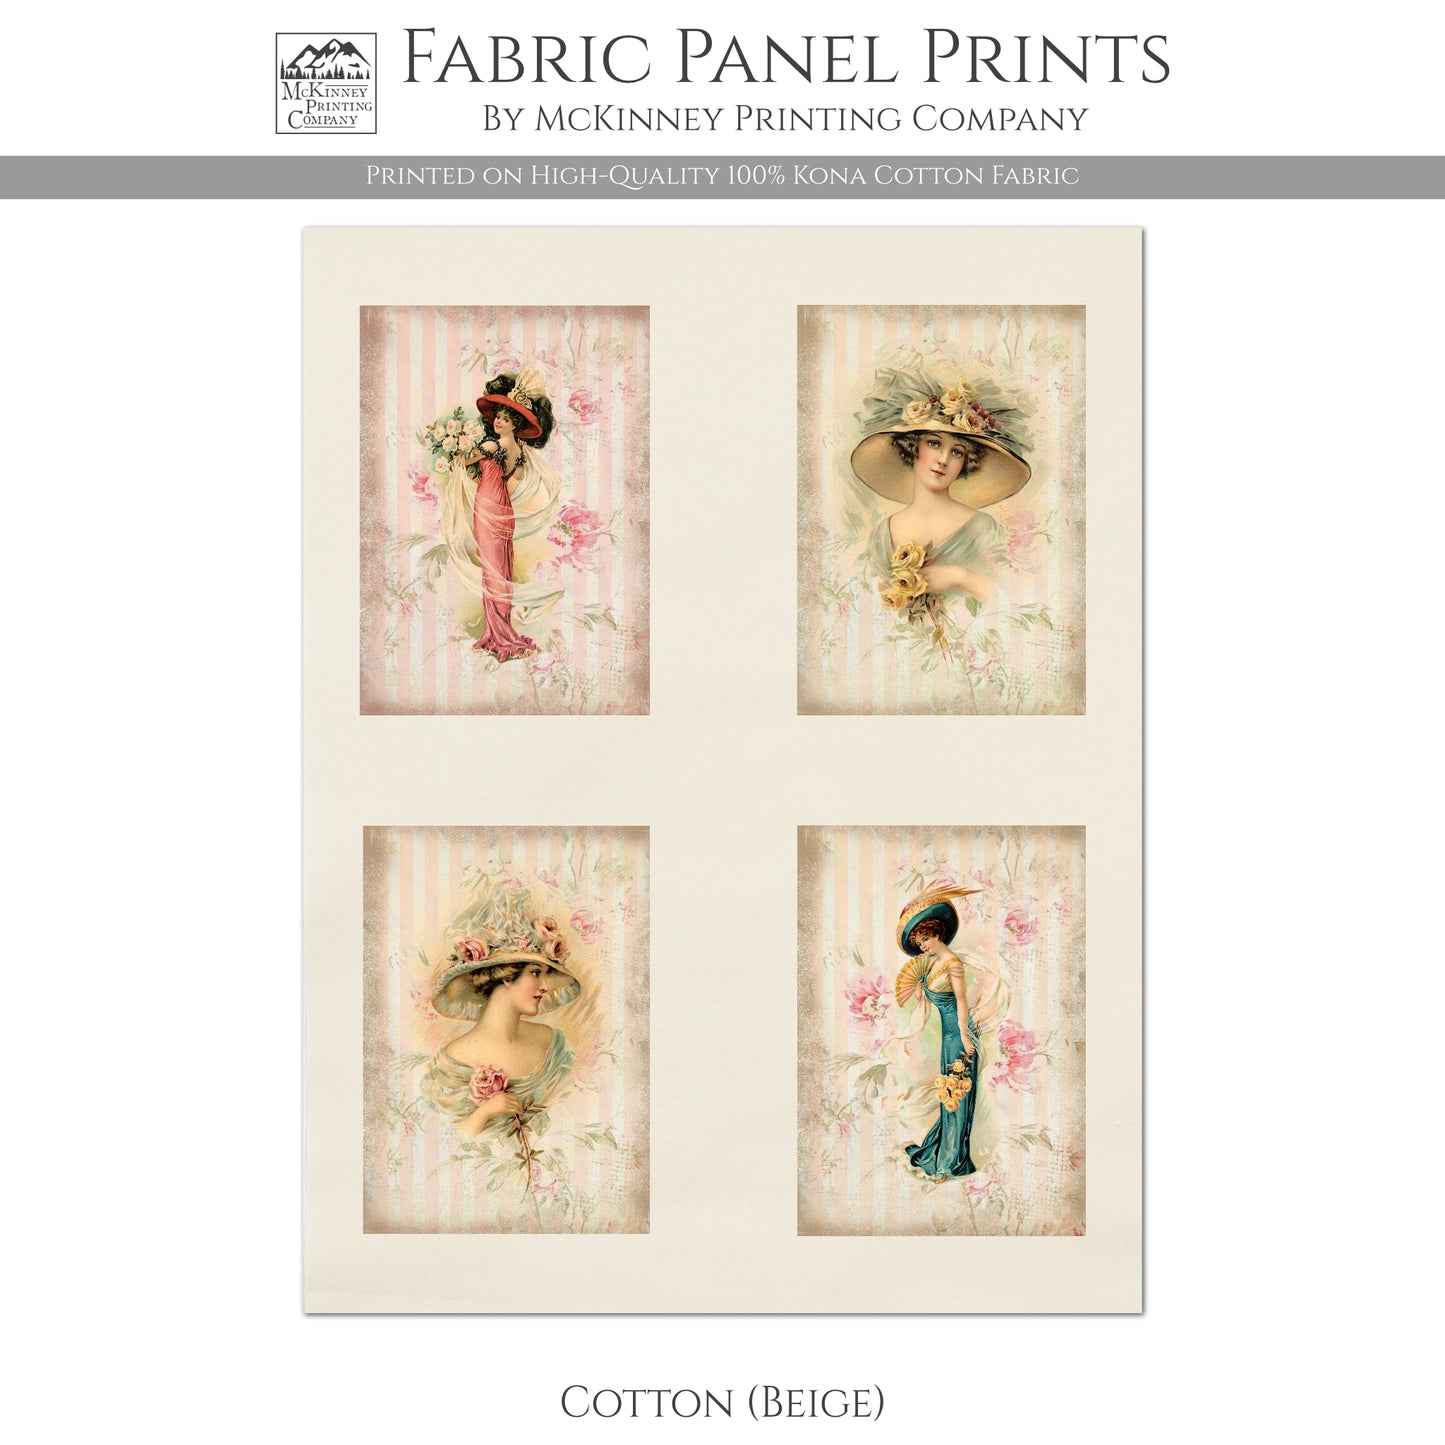 Victorian Prints, Woman in hat, Vintage Art, Fabric Panel Print - Cotton, Quilt Block